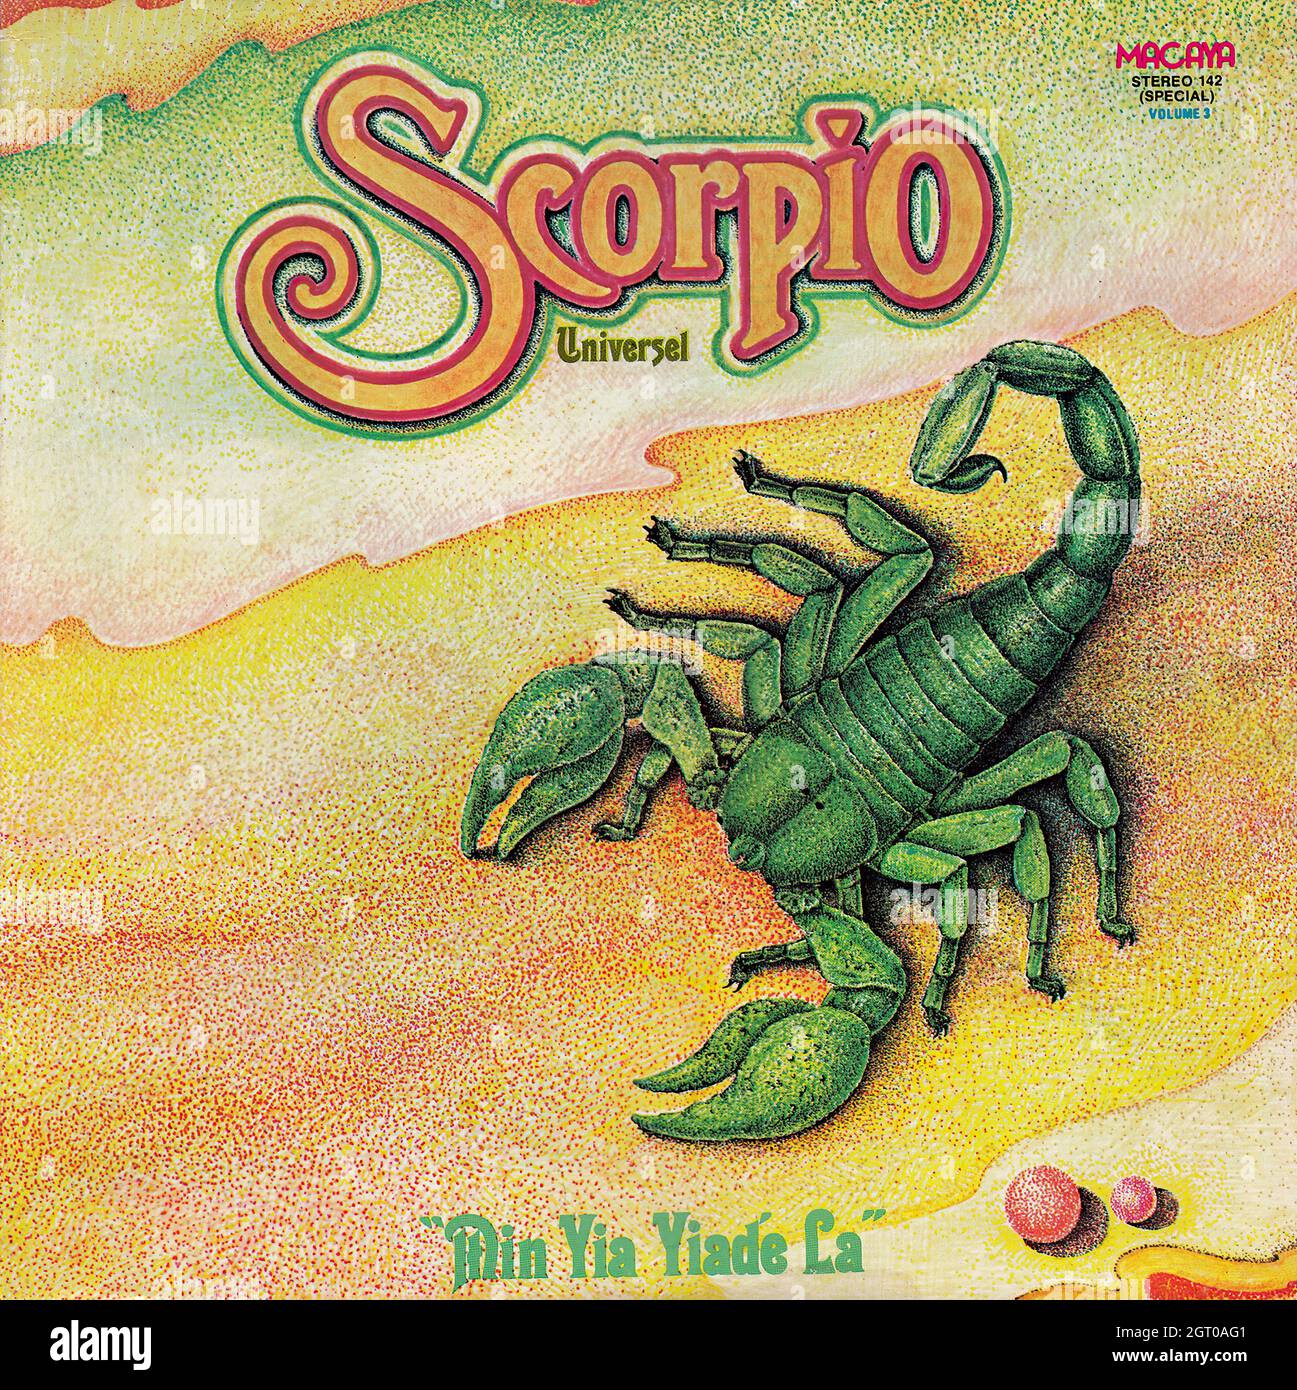 Scorpio Universel - min yia yiadé la - copertina Vintage Vinyl Record Foto Stock